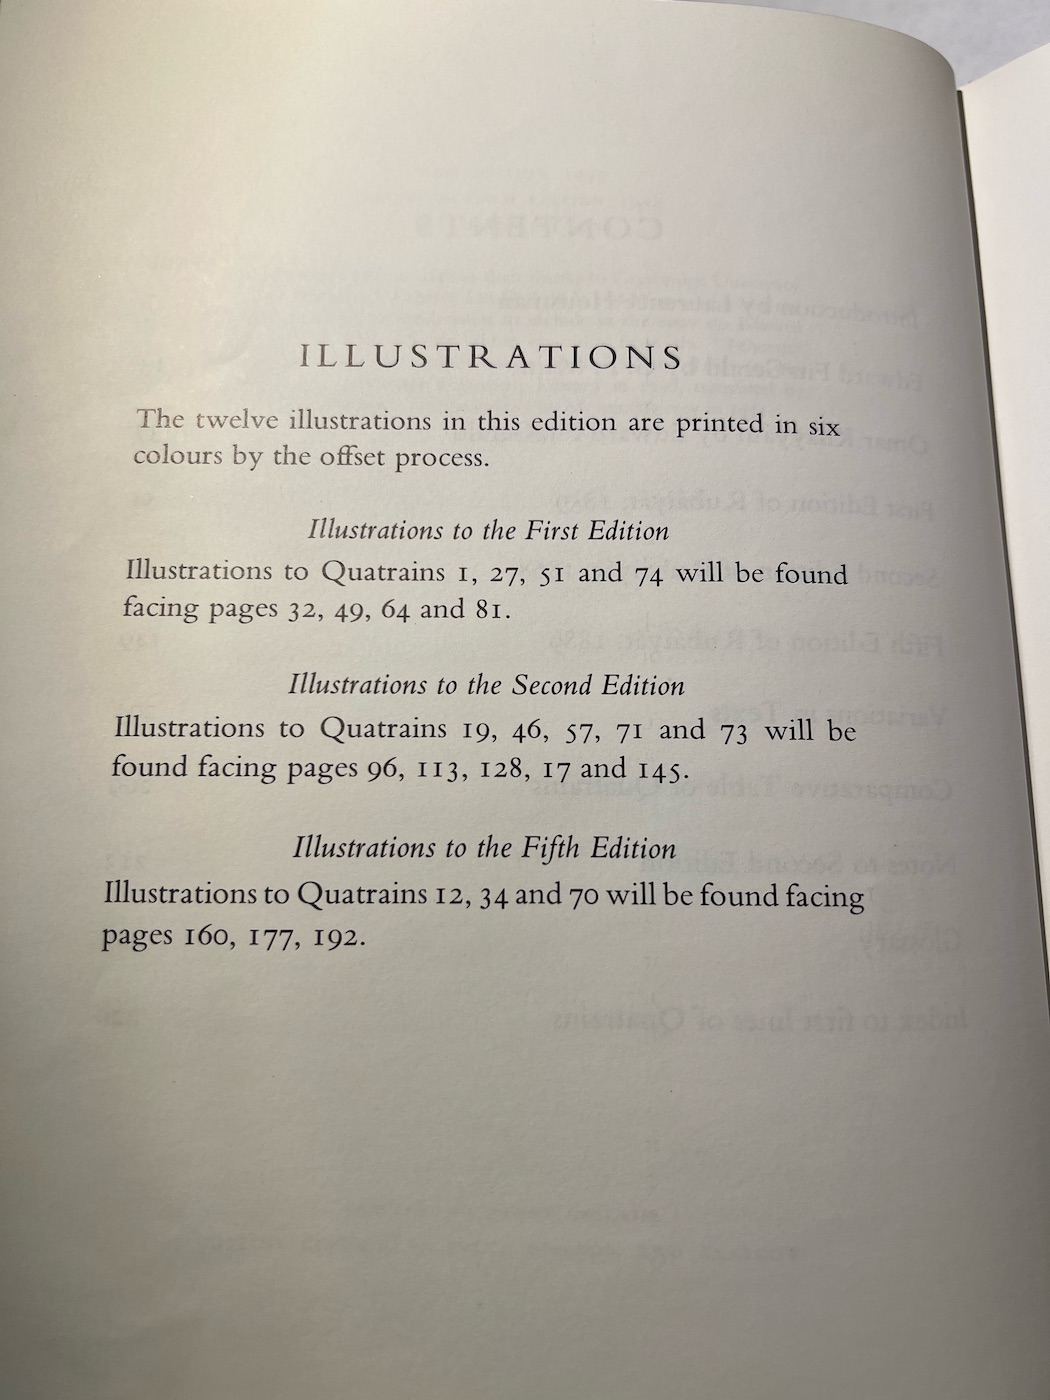 List of illustrations